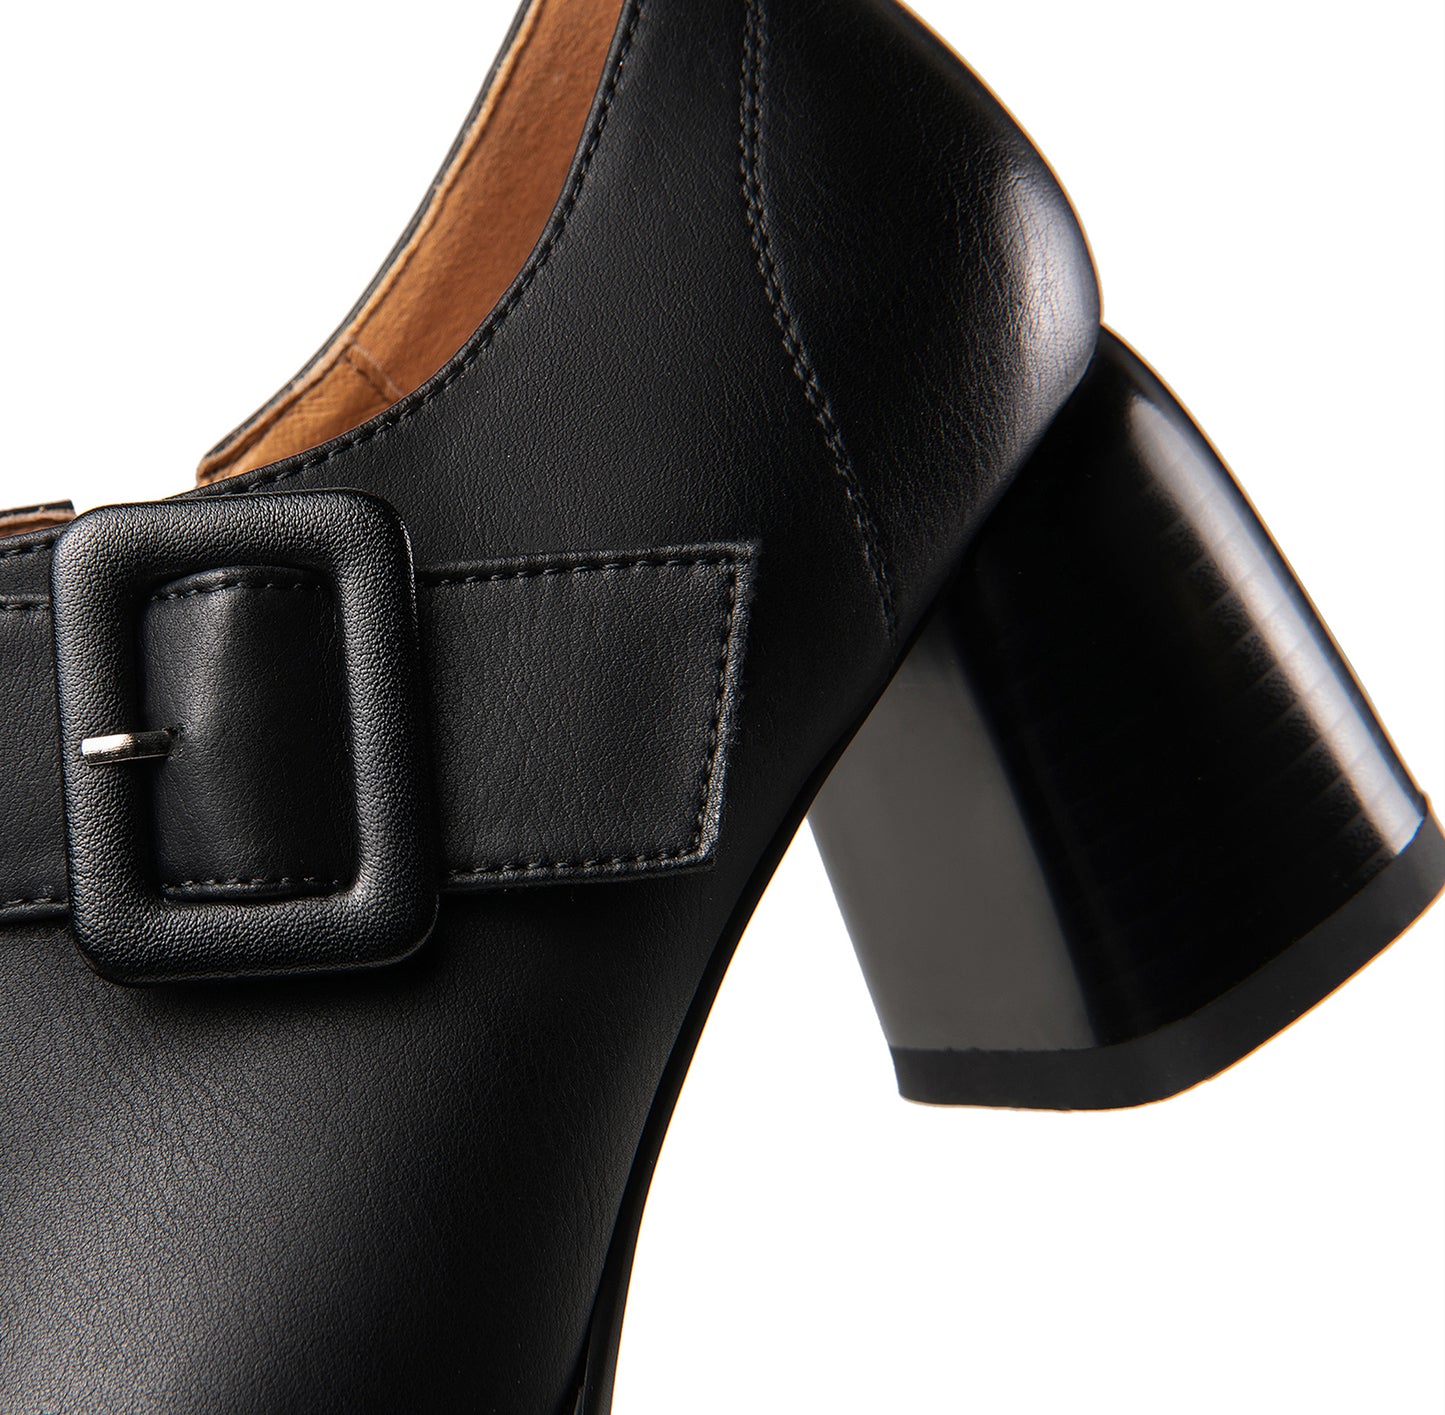 TinaCus Genuine Leather Women's Handmade Block Heel Side Zip Up Oxford Pumps with Modern Buckle